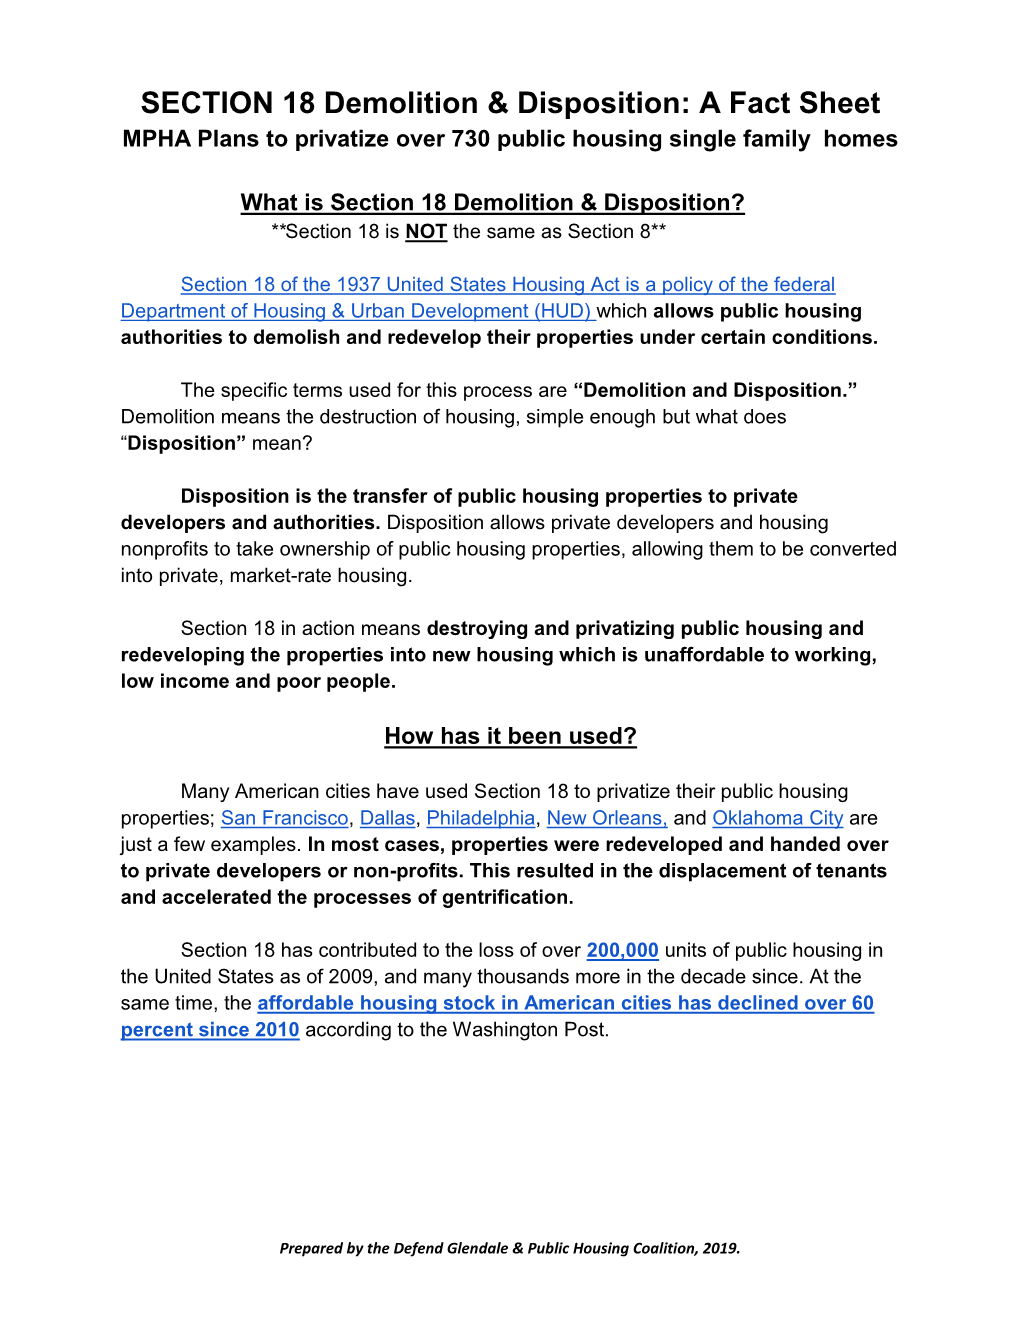 SECTION 18 Demolition & Disposition: a Fact Sheet